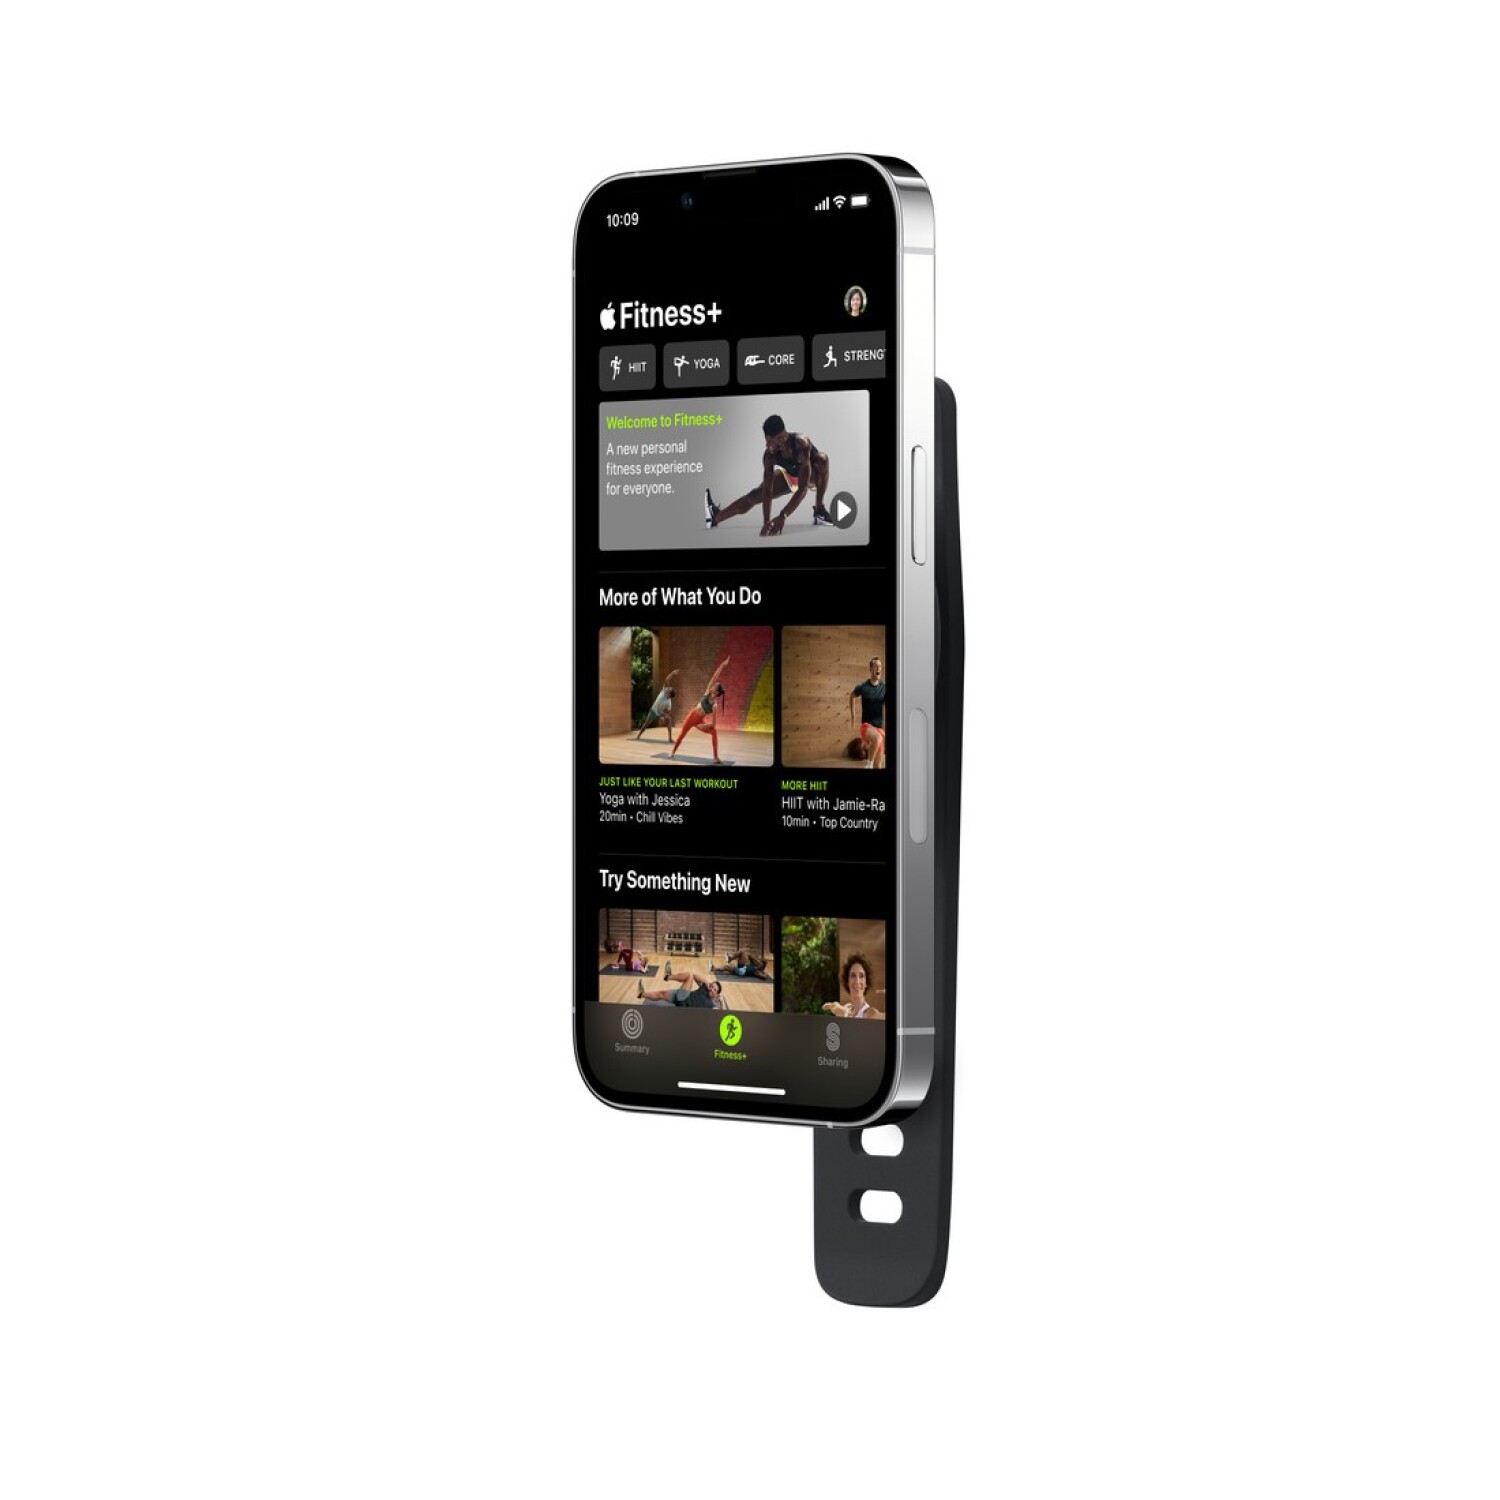 Soporte MagSafe para Iphone de Belkin 